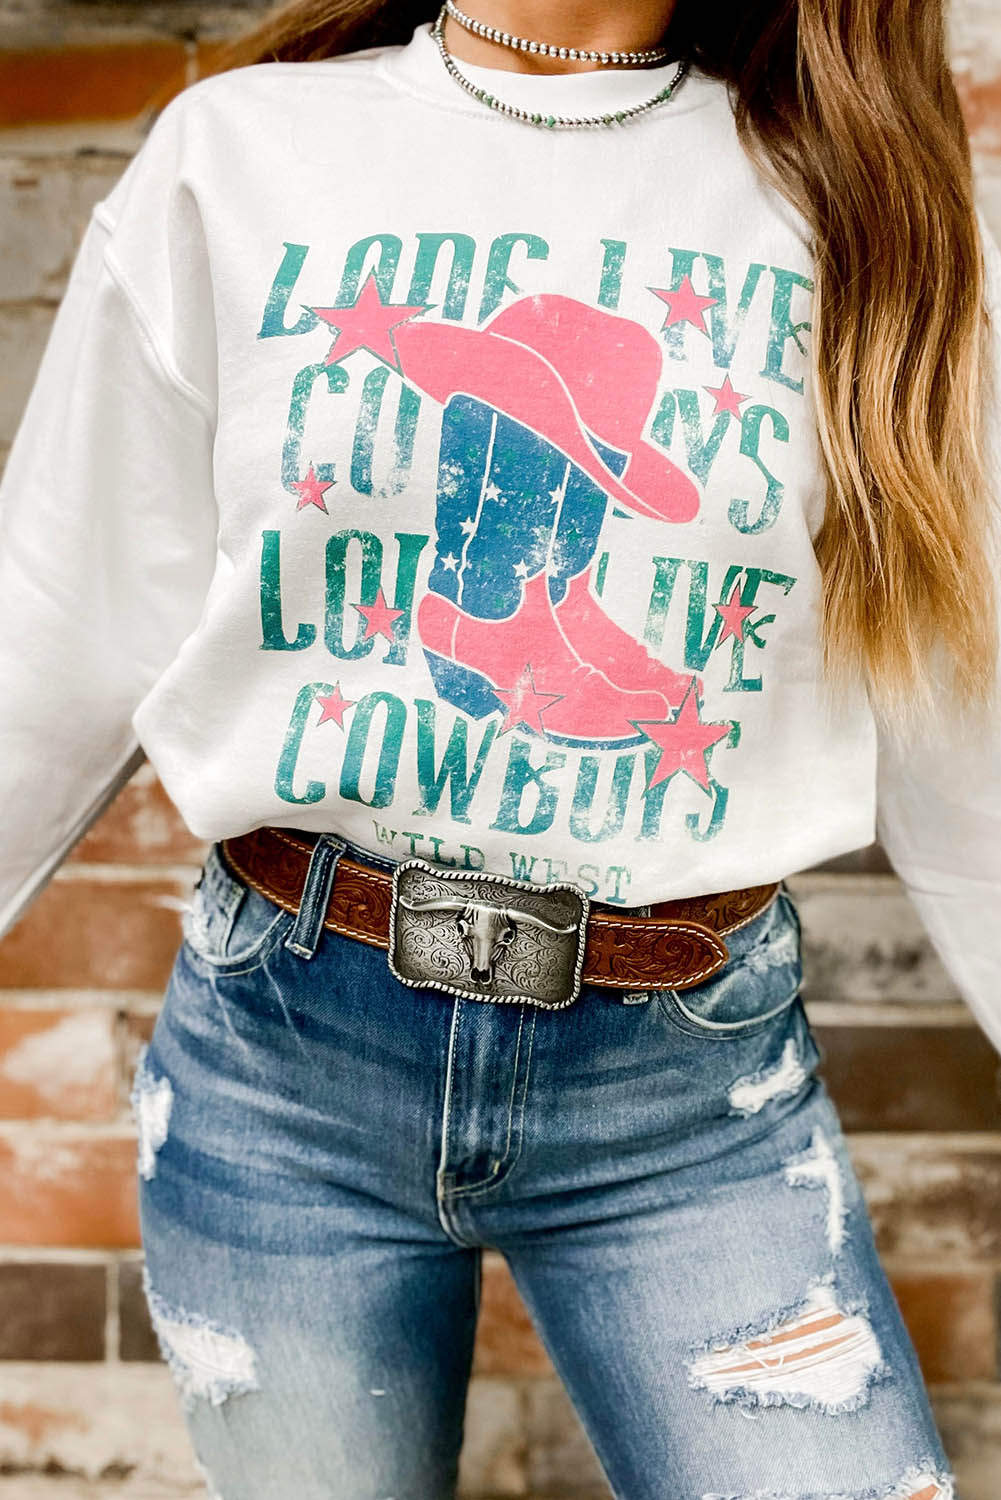 LONG LIVE COWBOY WILD WEST Graphic Sweatshirt